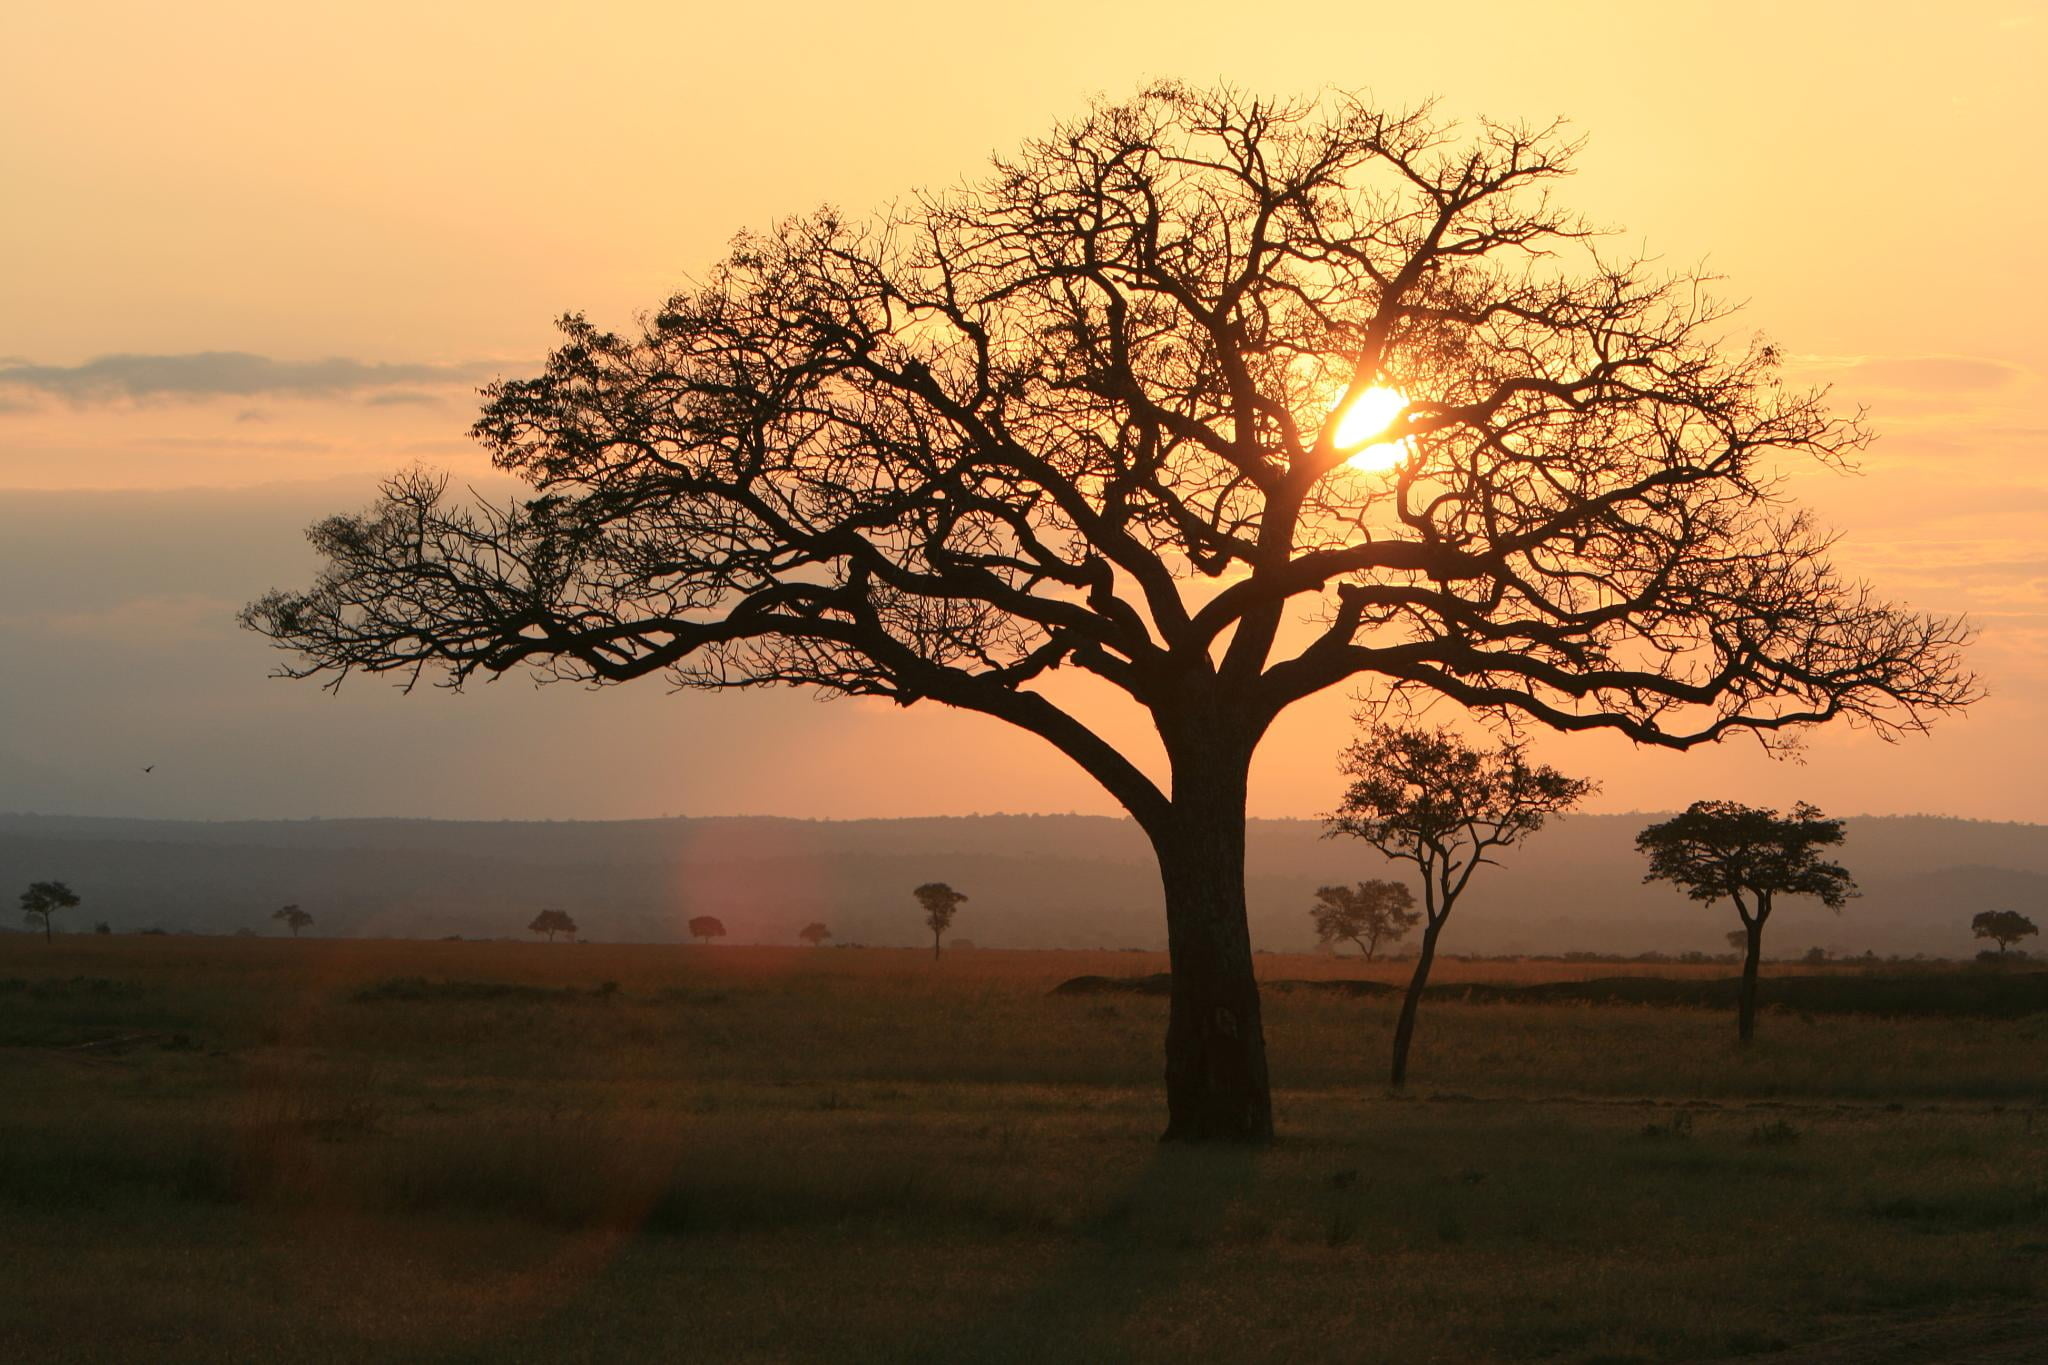 Namibia's nature, Acacia tree beauty, Green foliage, HD wallpaper view, 2050x1370 HD Desktop